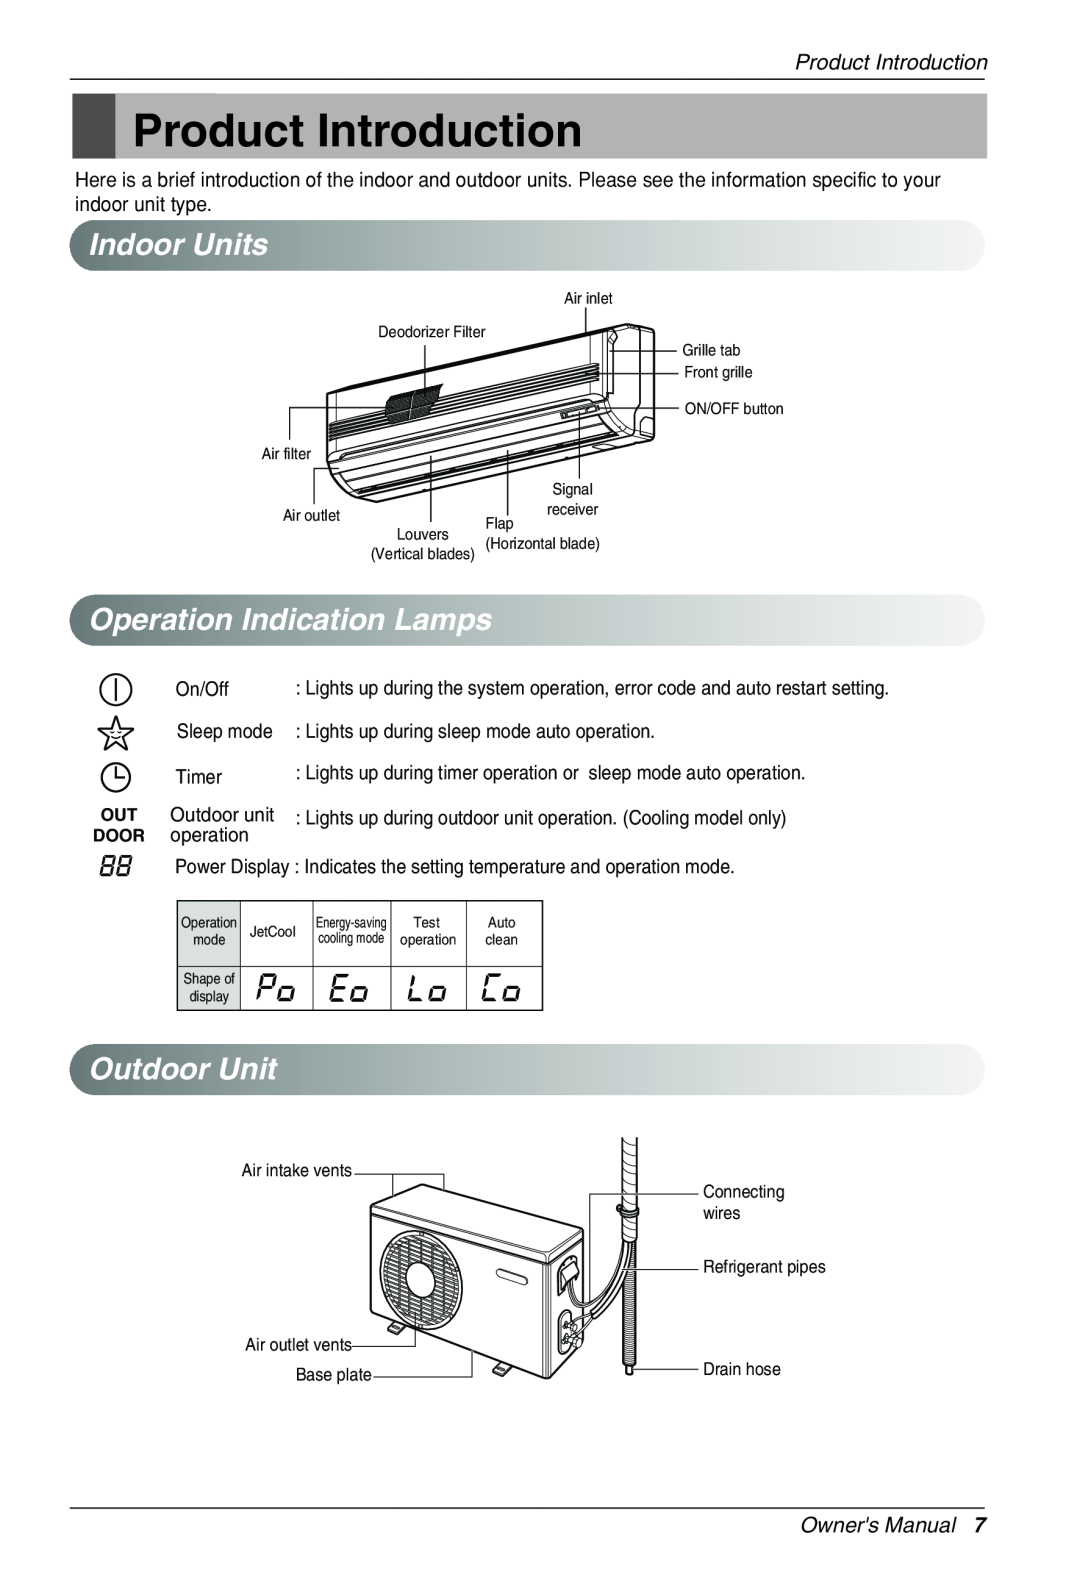 Heat Controller VMC30SB-1 Product Introduction, IndoorUnits, OperationIndicationLamps, OutdoorUnit, On/Off, Sleep mode 